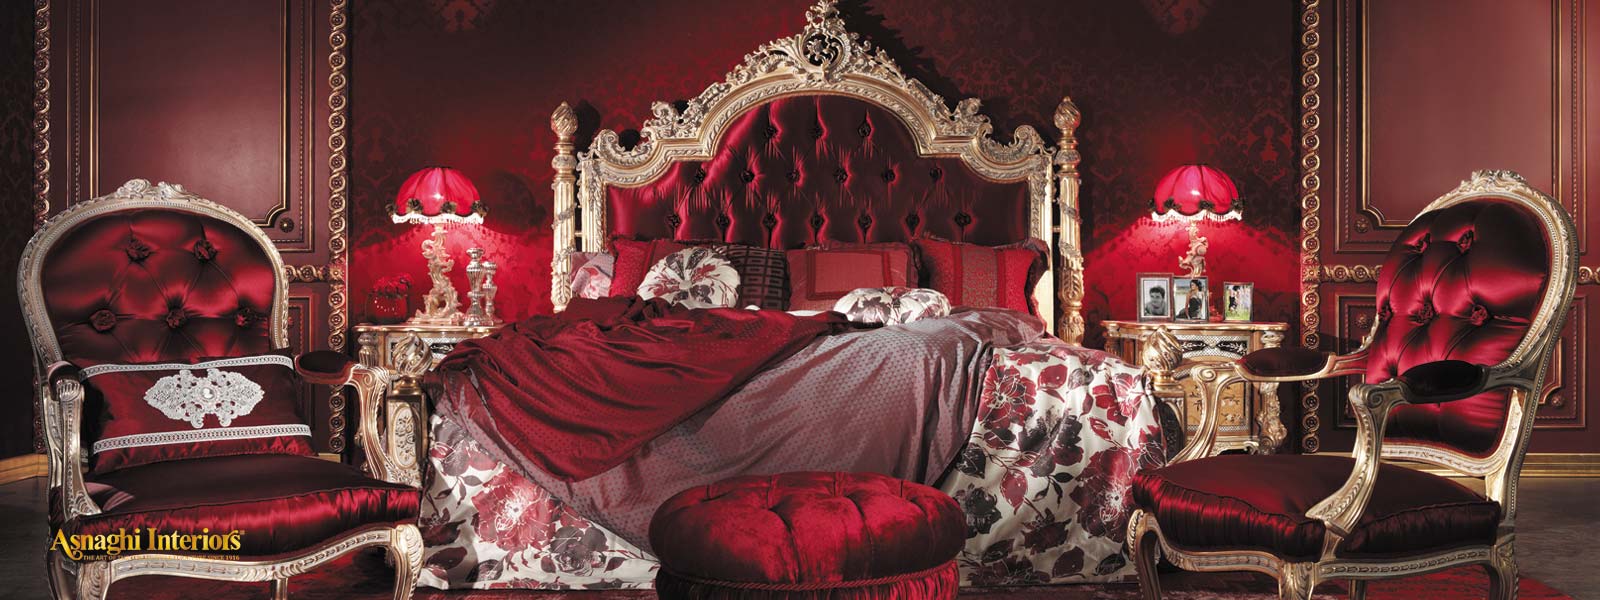 Asnaghi Italian classic bed set